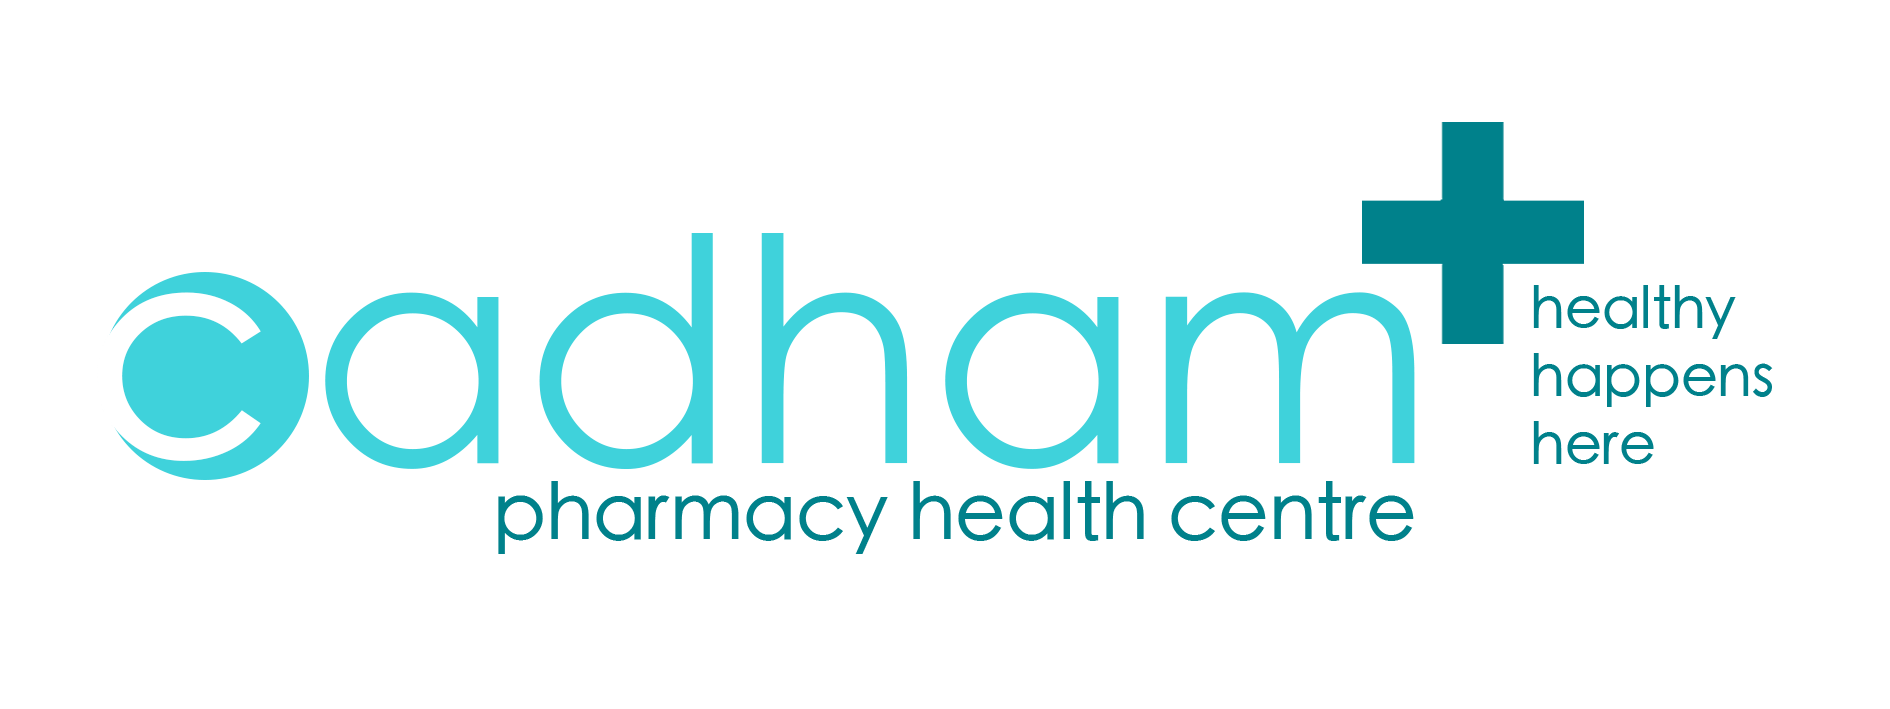 Cadham Pharmacy